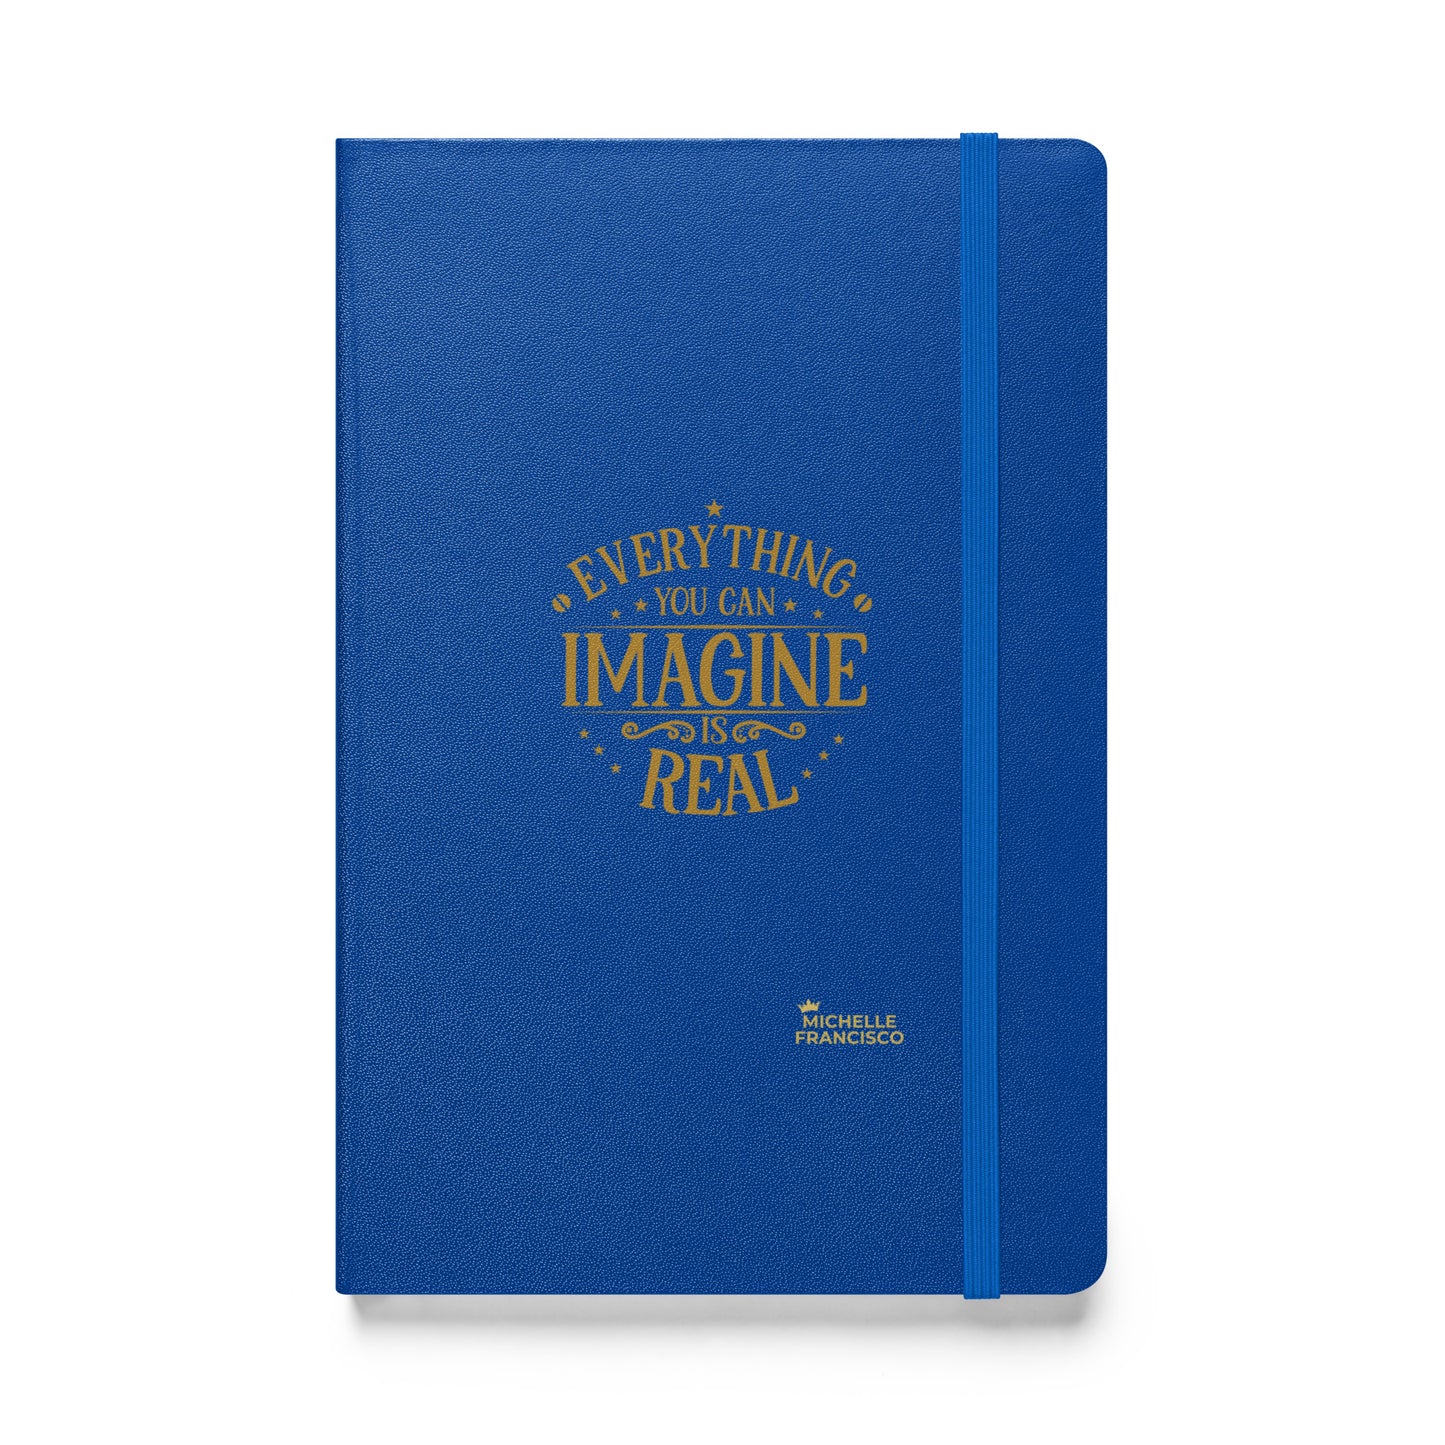 Imagination Hardcover Bound Notebook